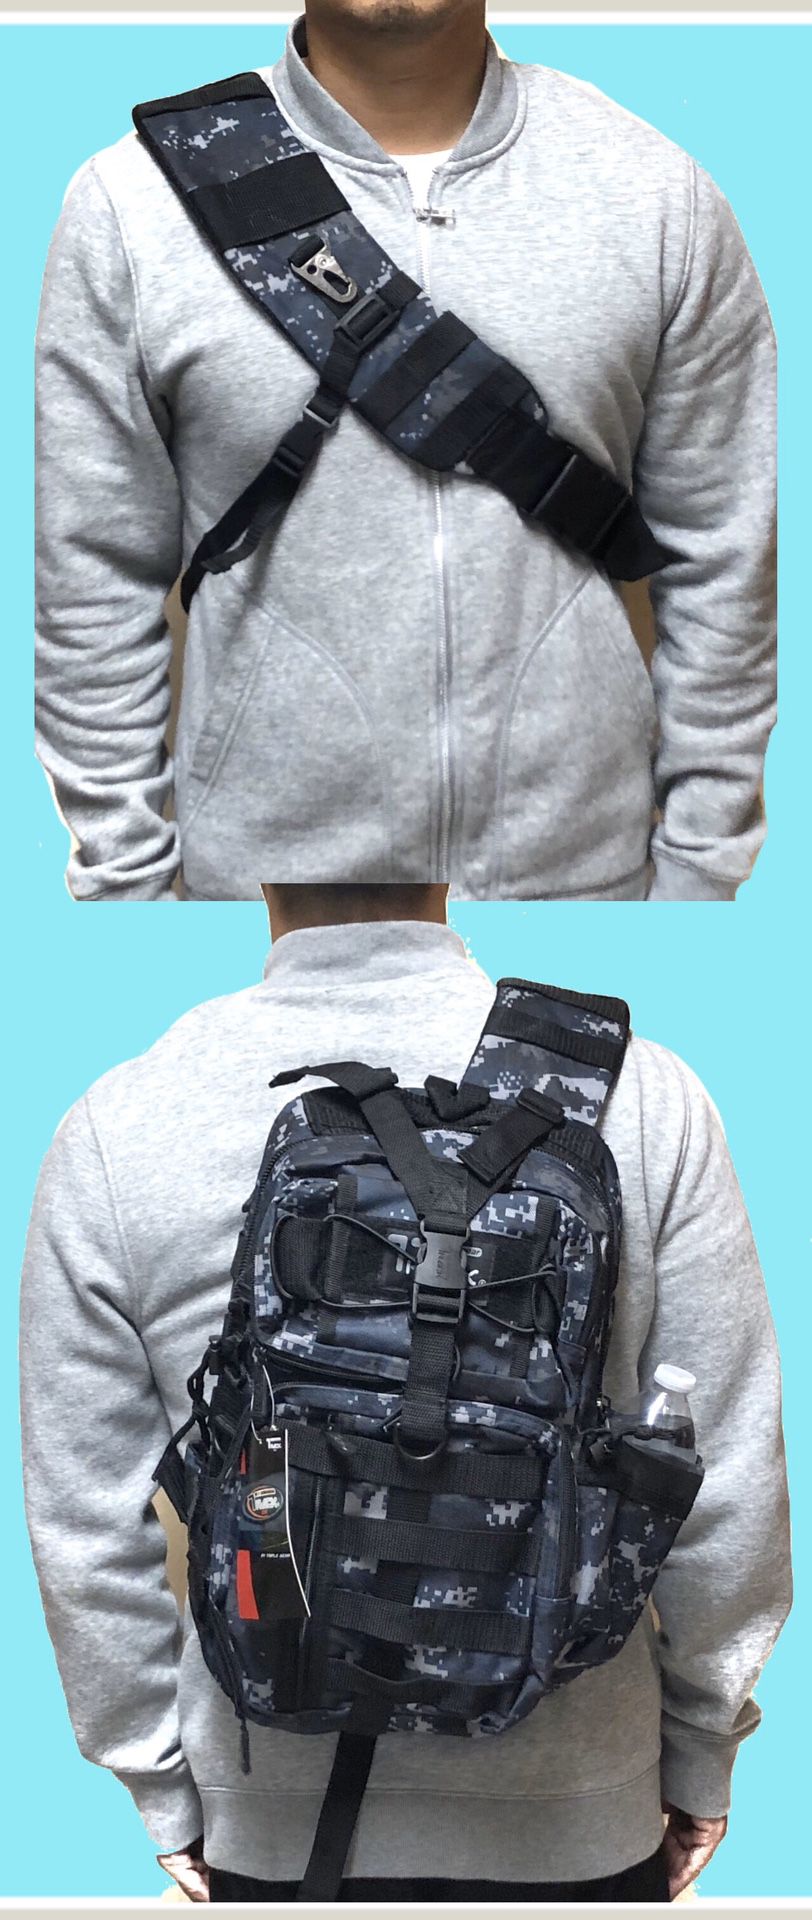 NEW! Tactical Military Style Backpack Sling Side Crossbody Bag gym bag work bag travel luggage school bag molle camping hiking biking